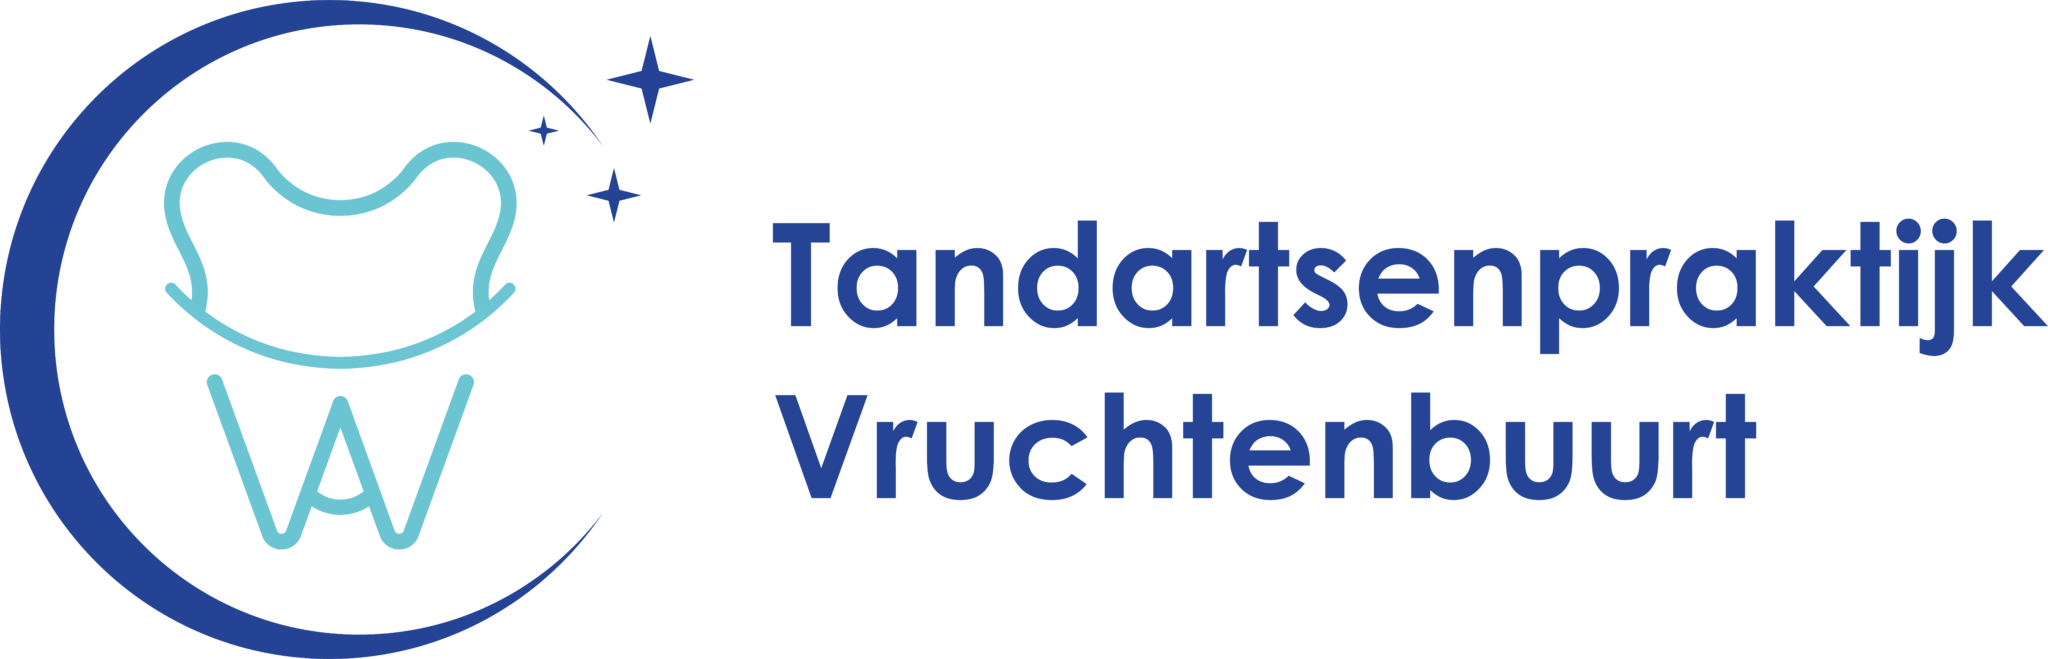 Logo Tandarts Vruchtenbuurt